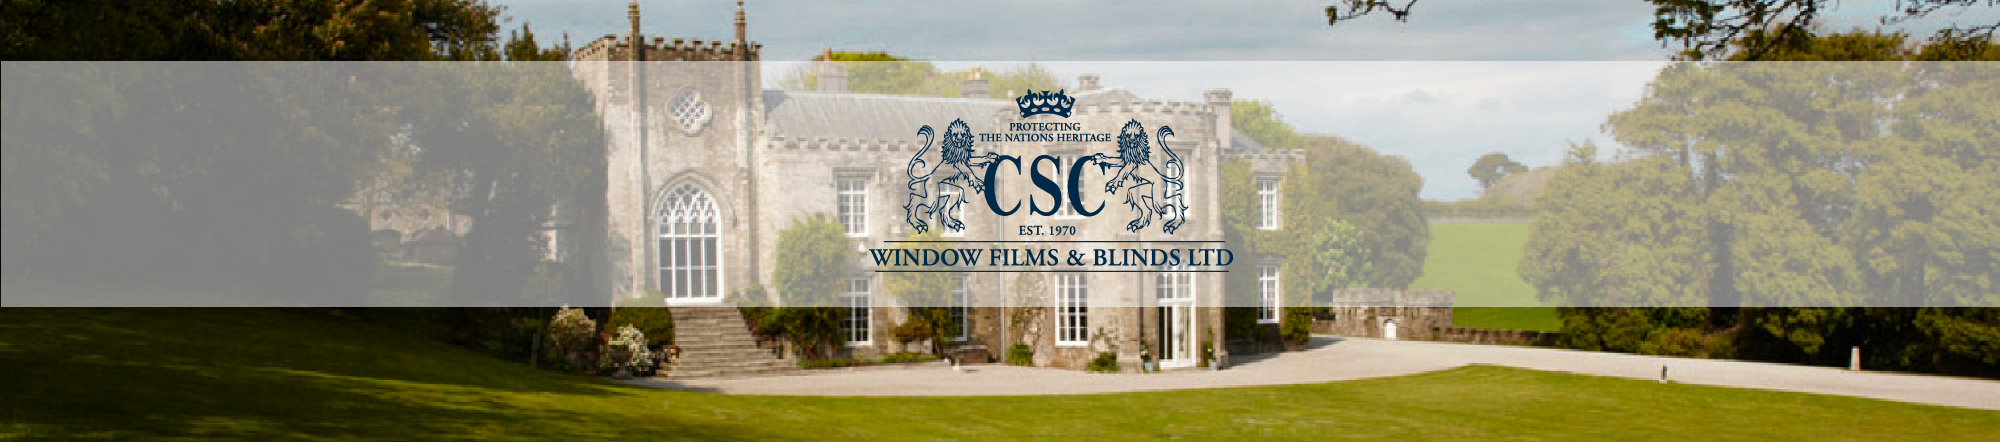 CSC WINDOW FILMS